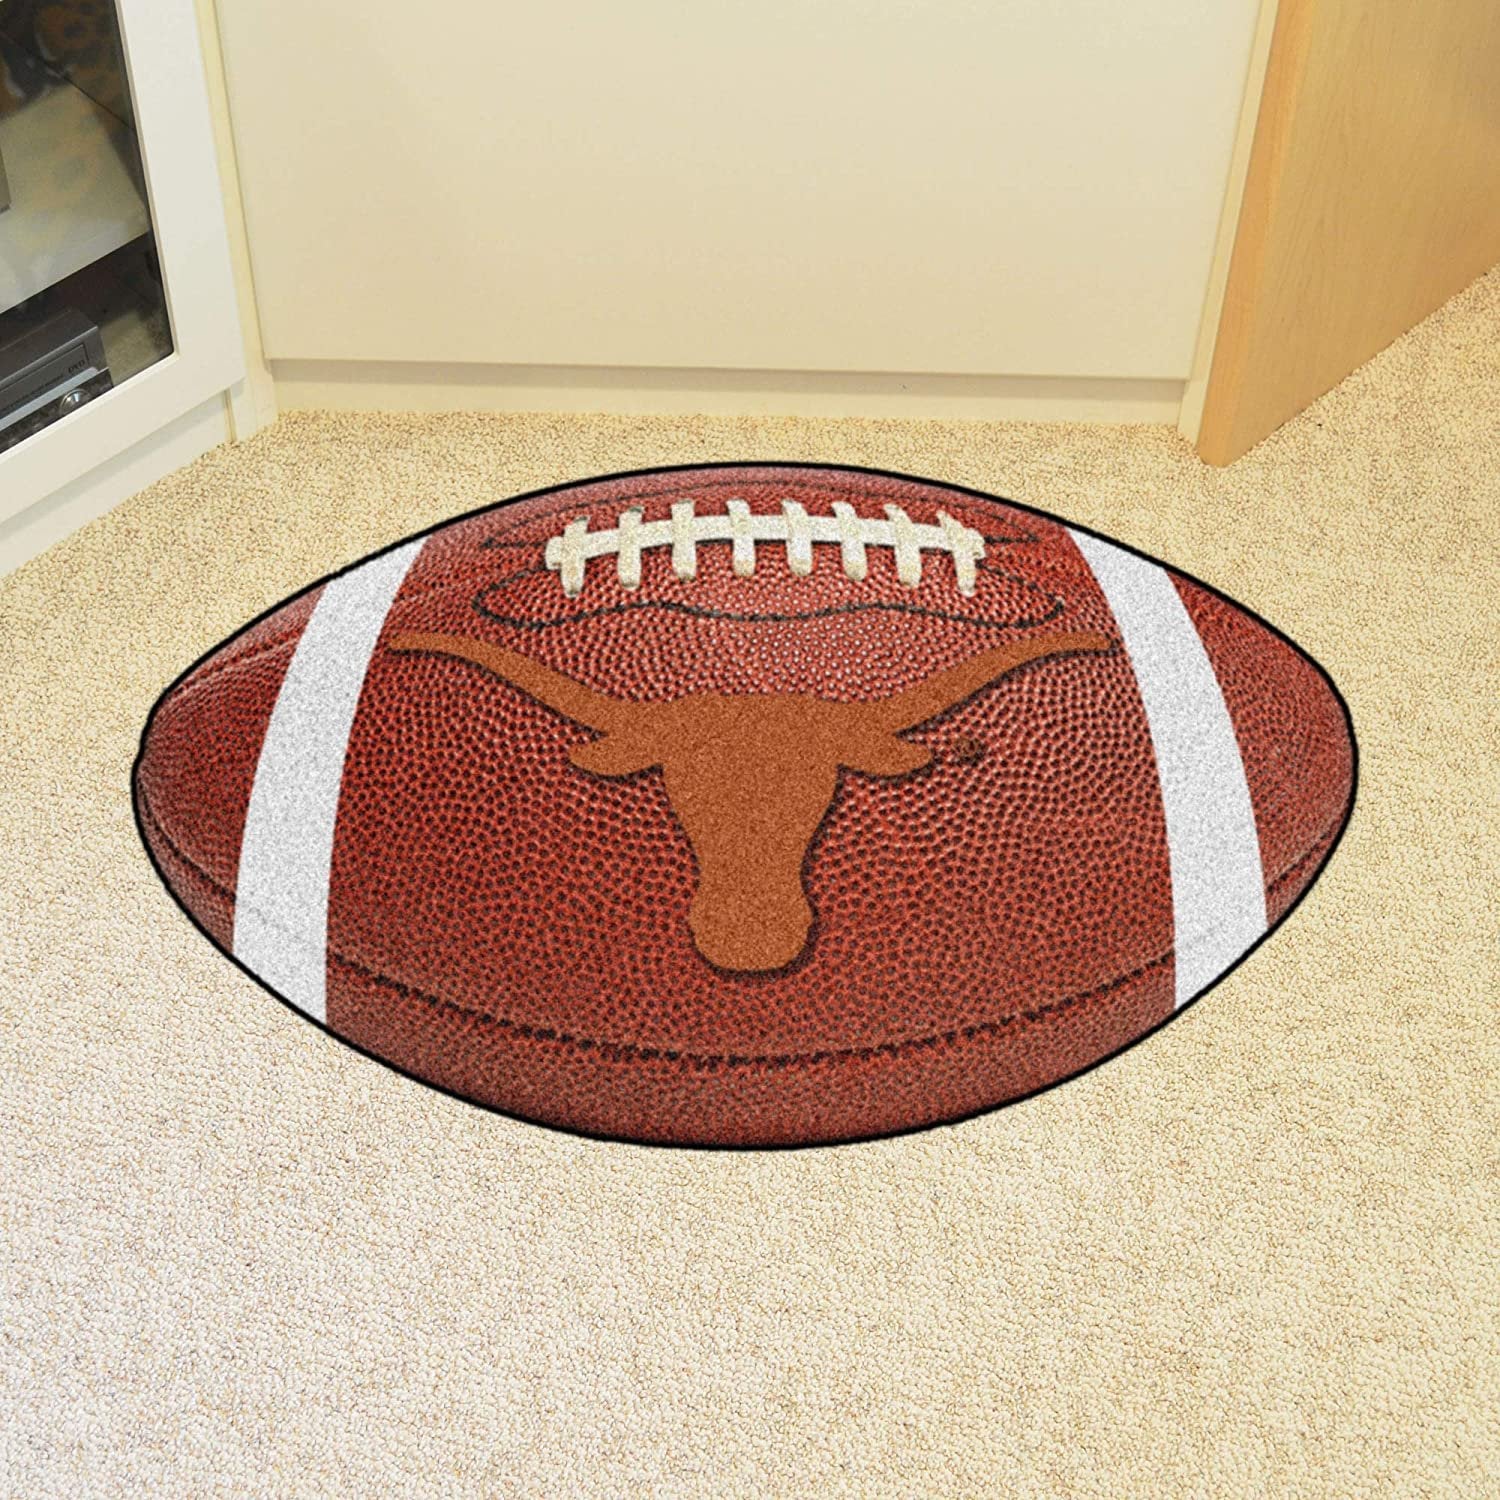 University of Texas Longhorns Floor Mat Area Rug, 20x32 Inch, Non-Skid Backing, Football Design